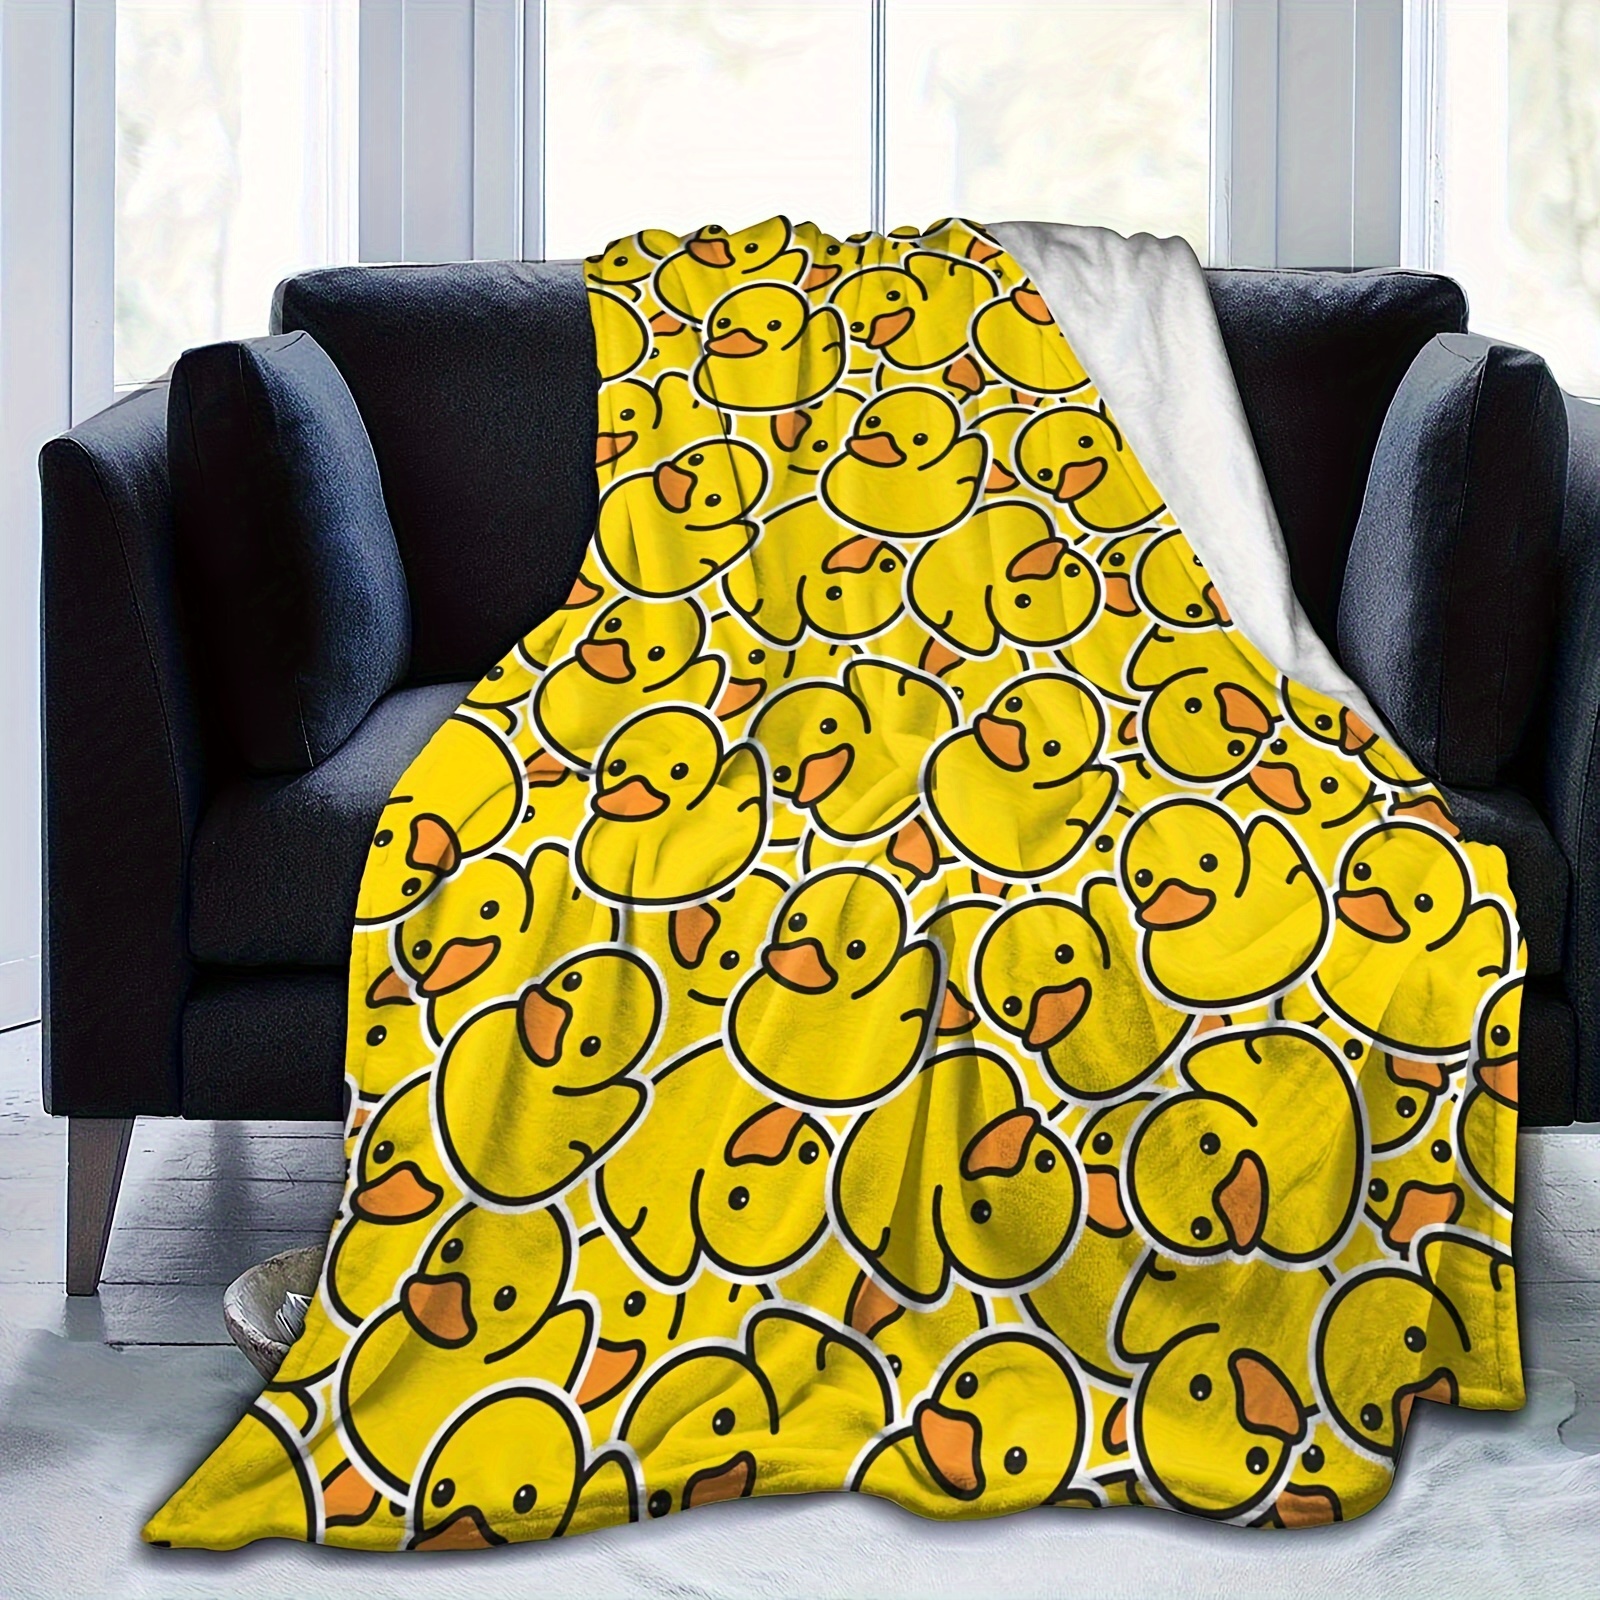 

1pc Cute Rubber Duck Throw Blanket Ultra Soft Warm All Season Yellow Cartoon Ducks Decorative Blankets For Bed Chair Car Sofa Couch